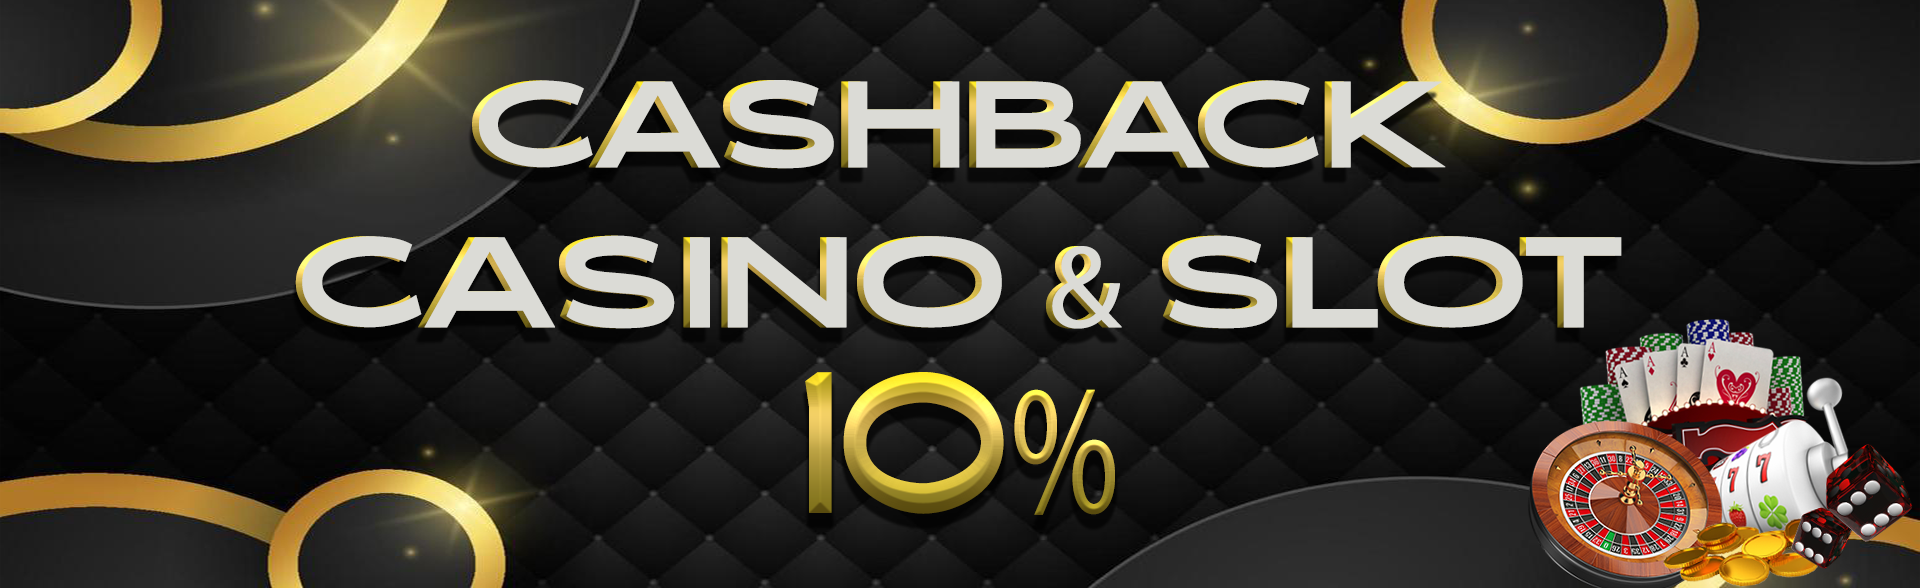 Cashback Casino & Slot